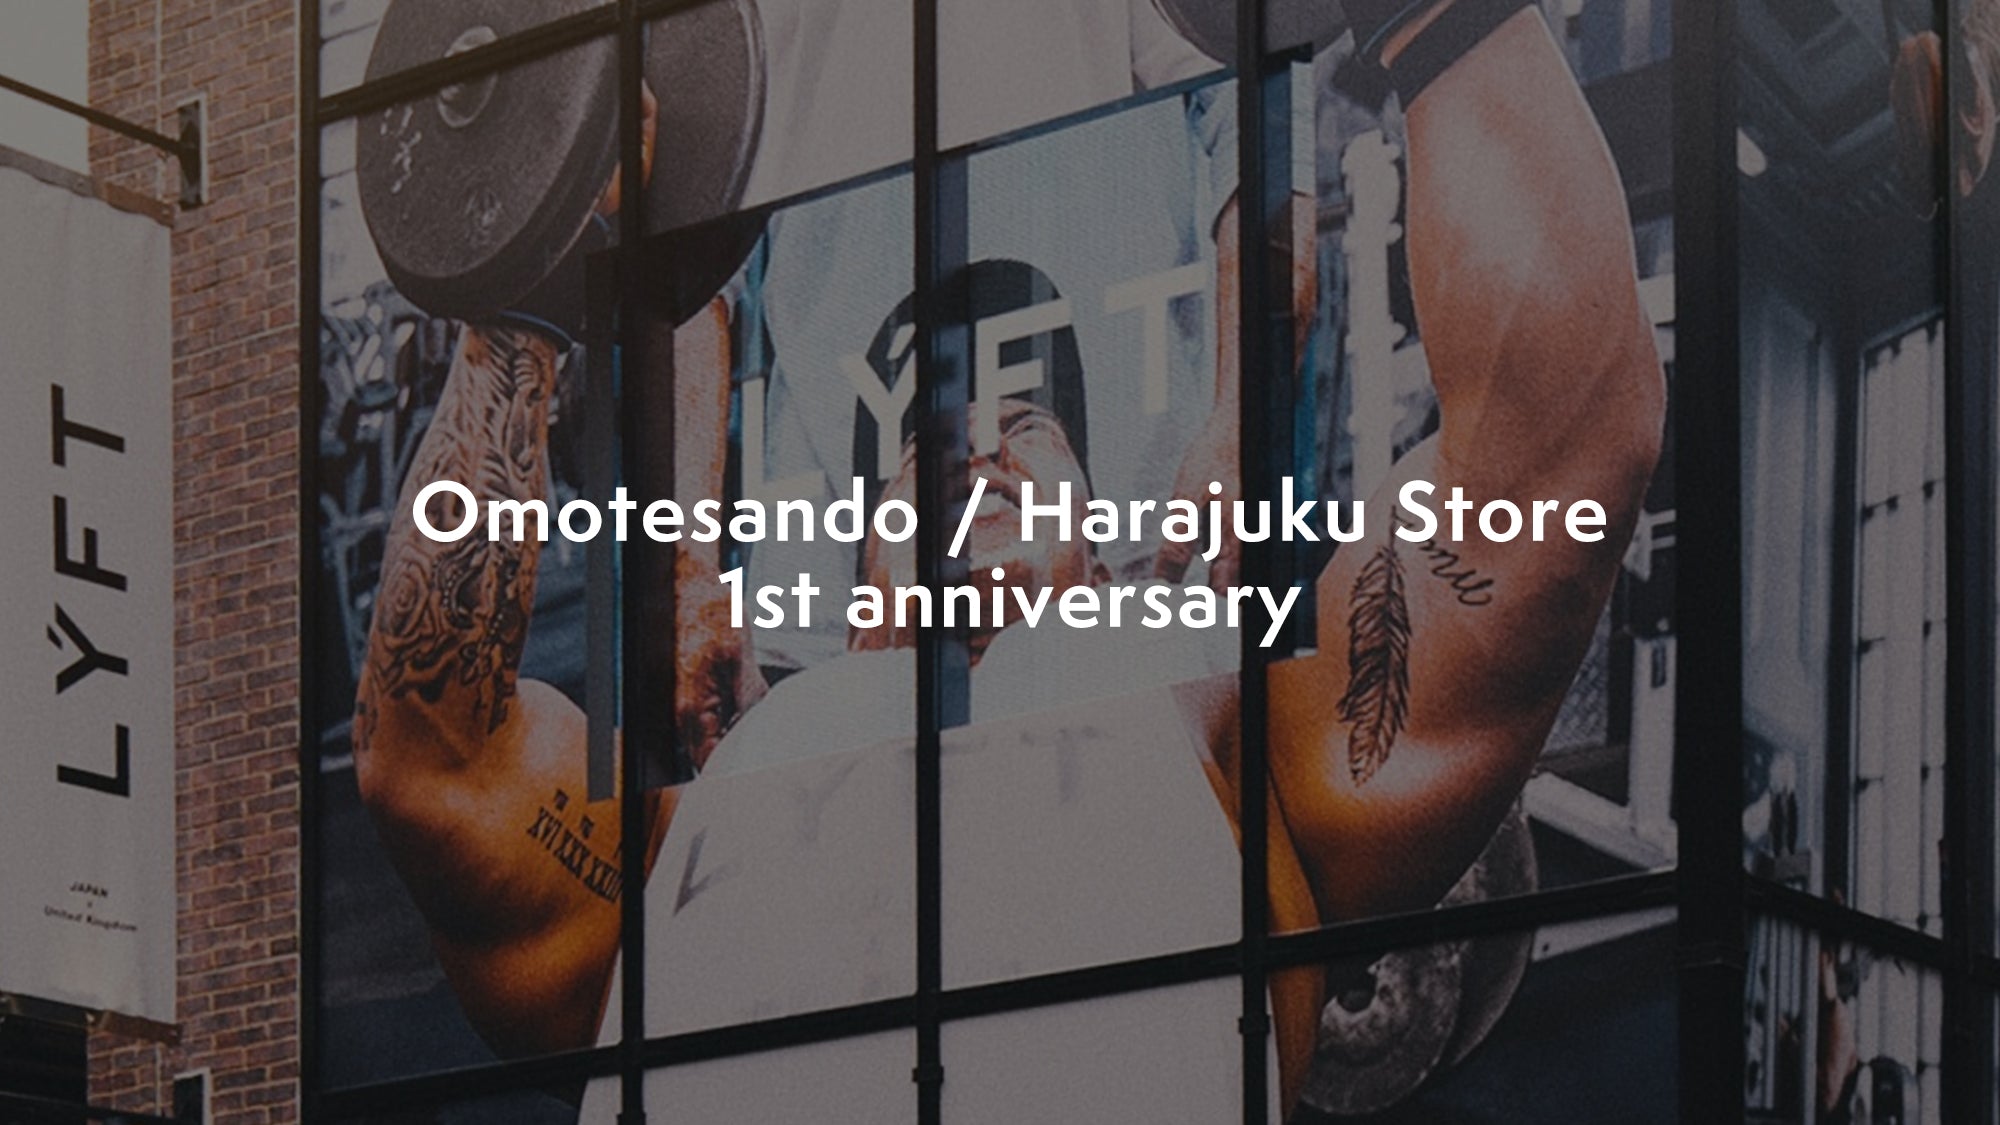 Omotesando / Harajuku Store 1st anniversary – LÝFT